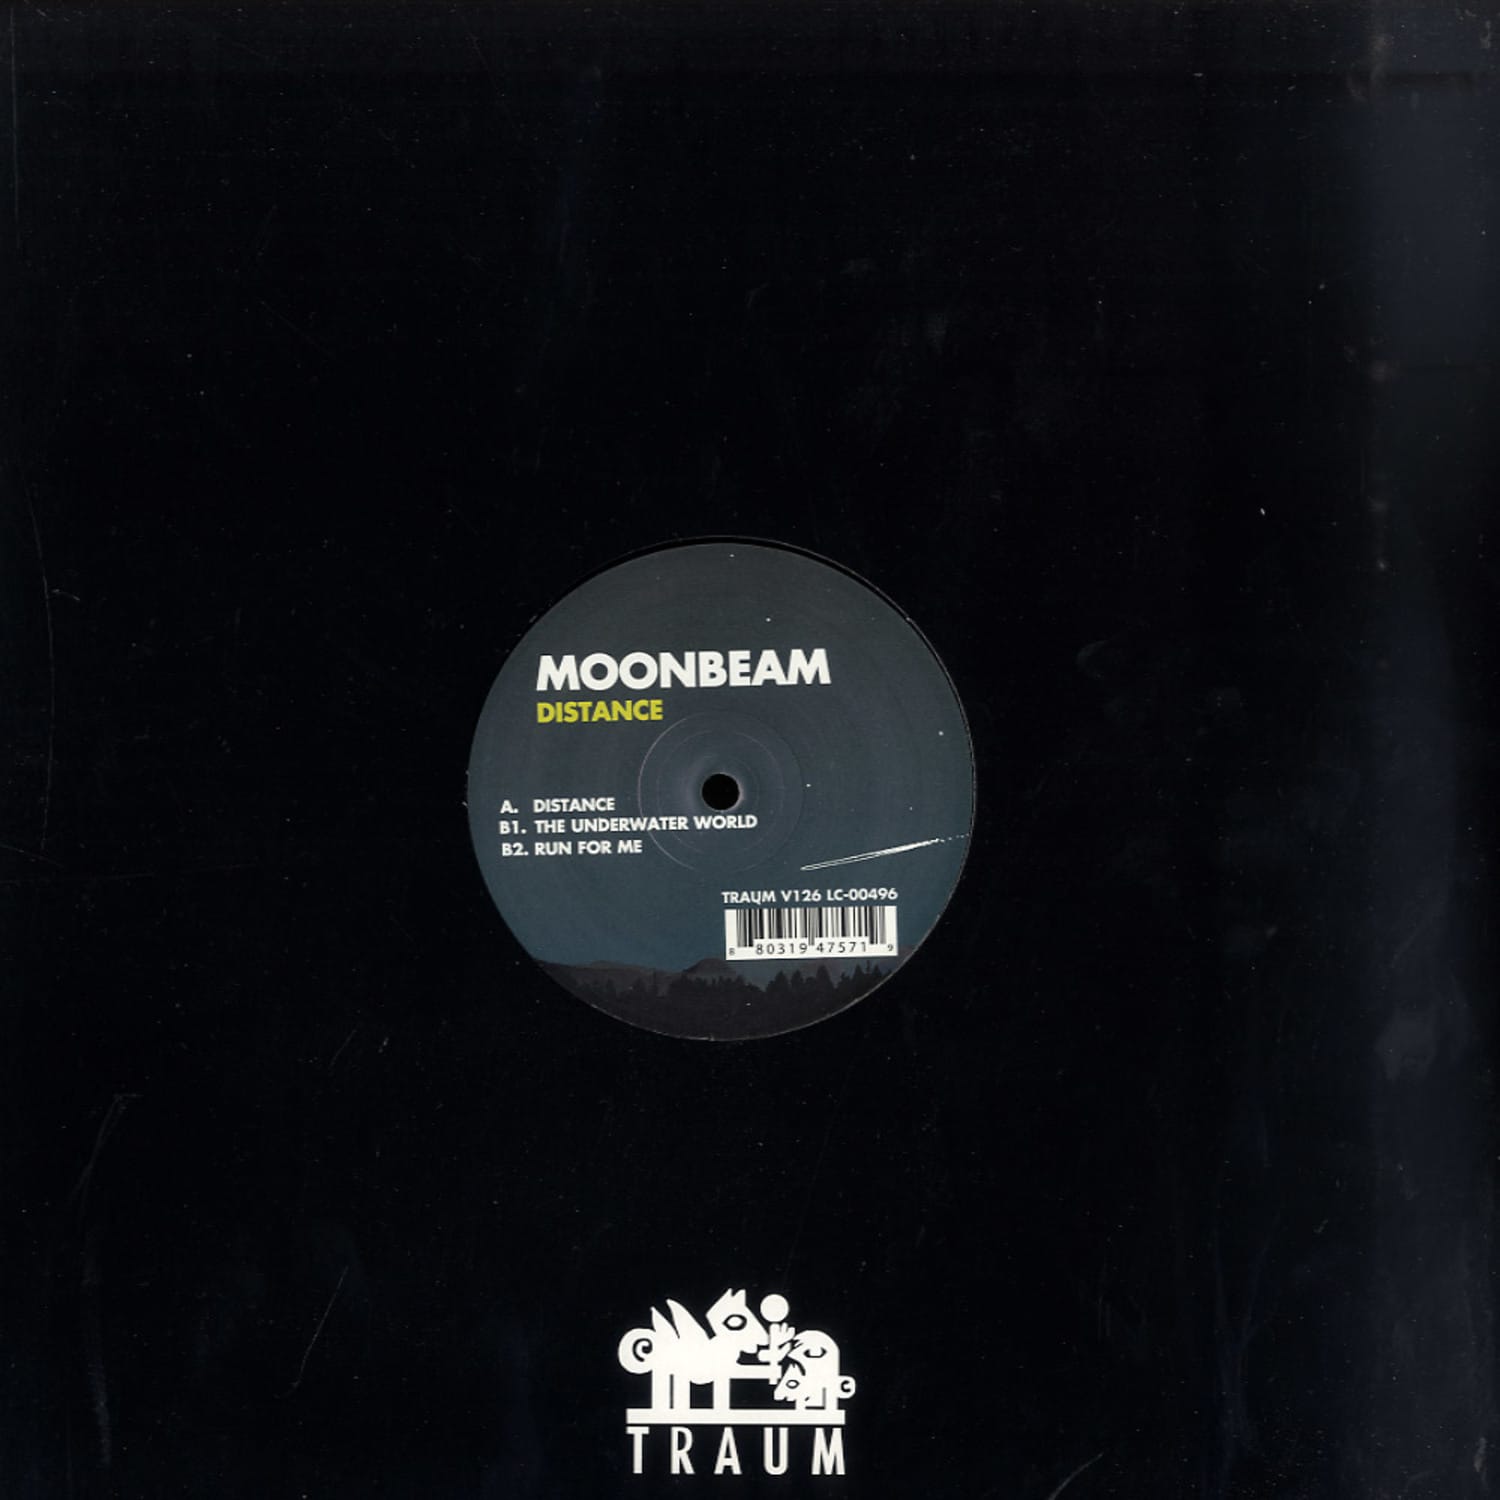 Moonbeam - DISTANCE